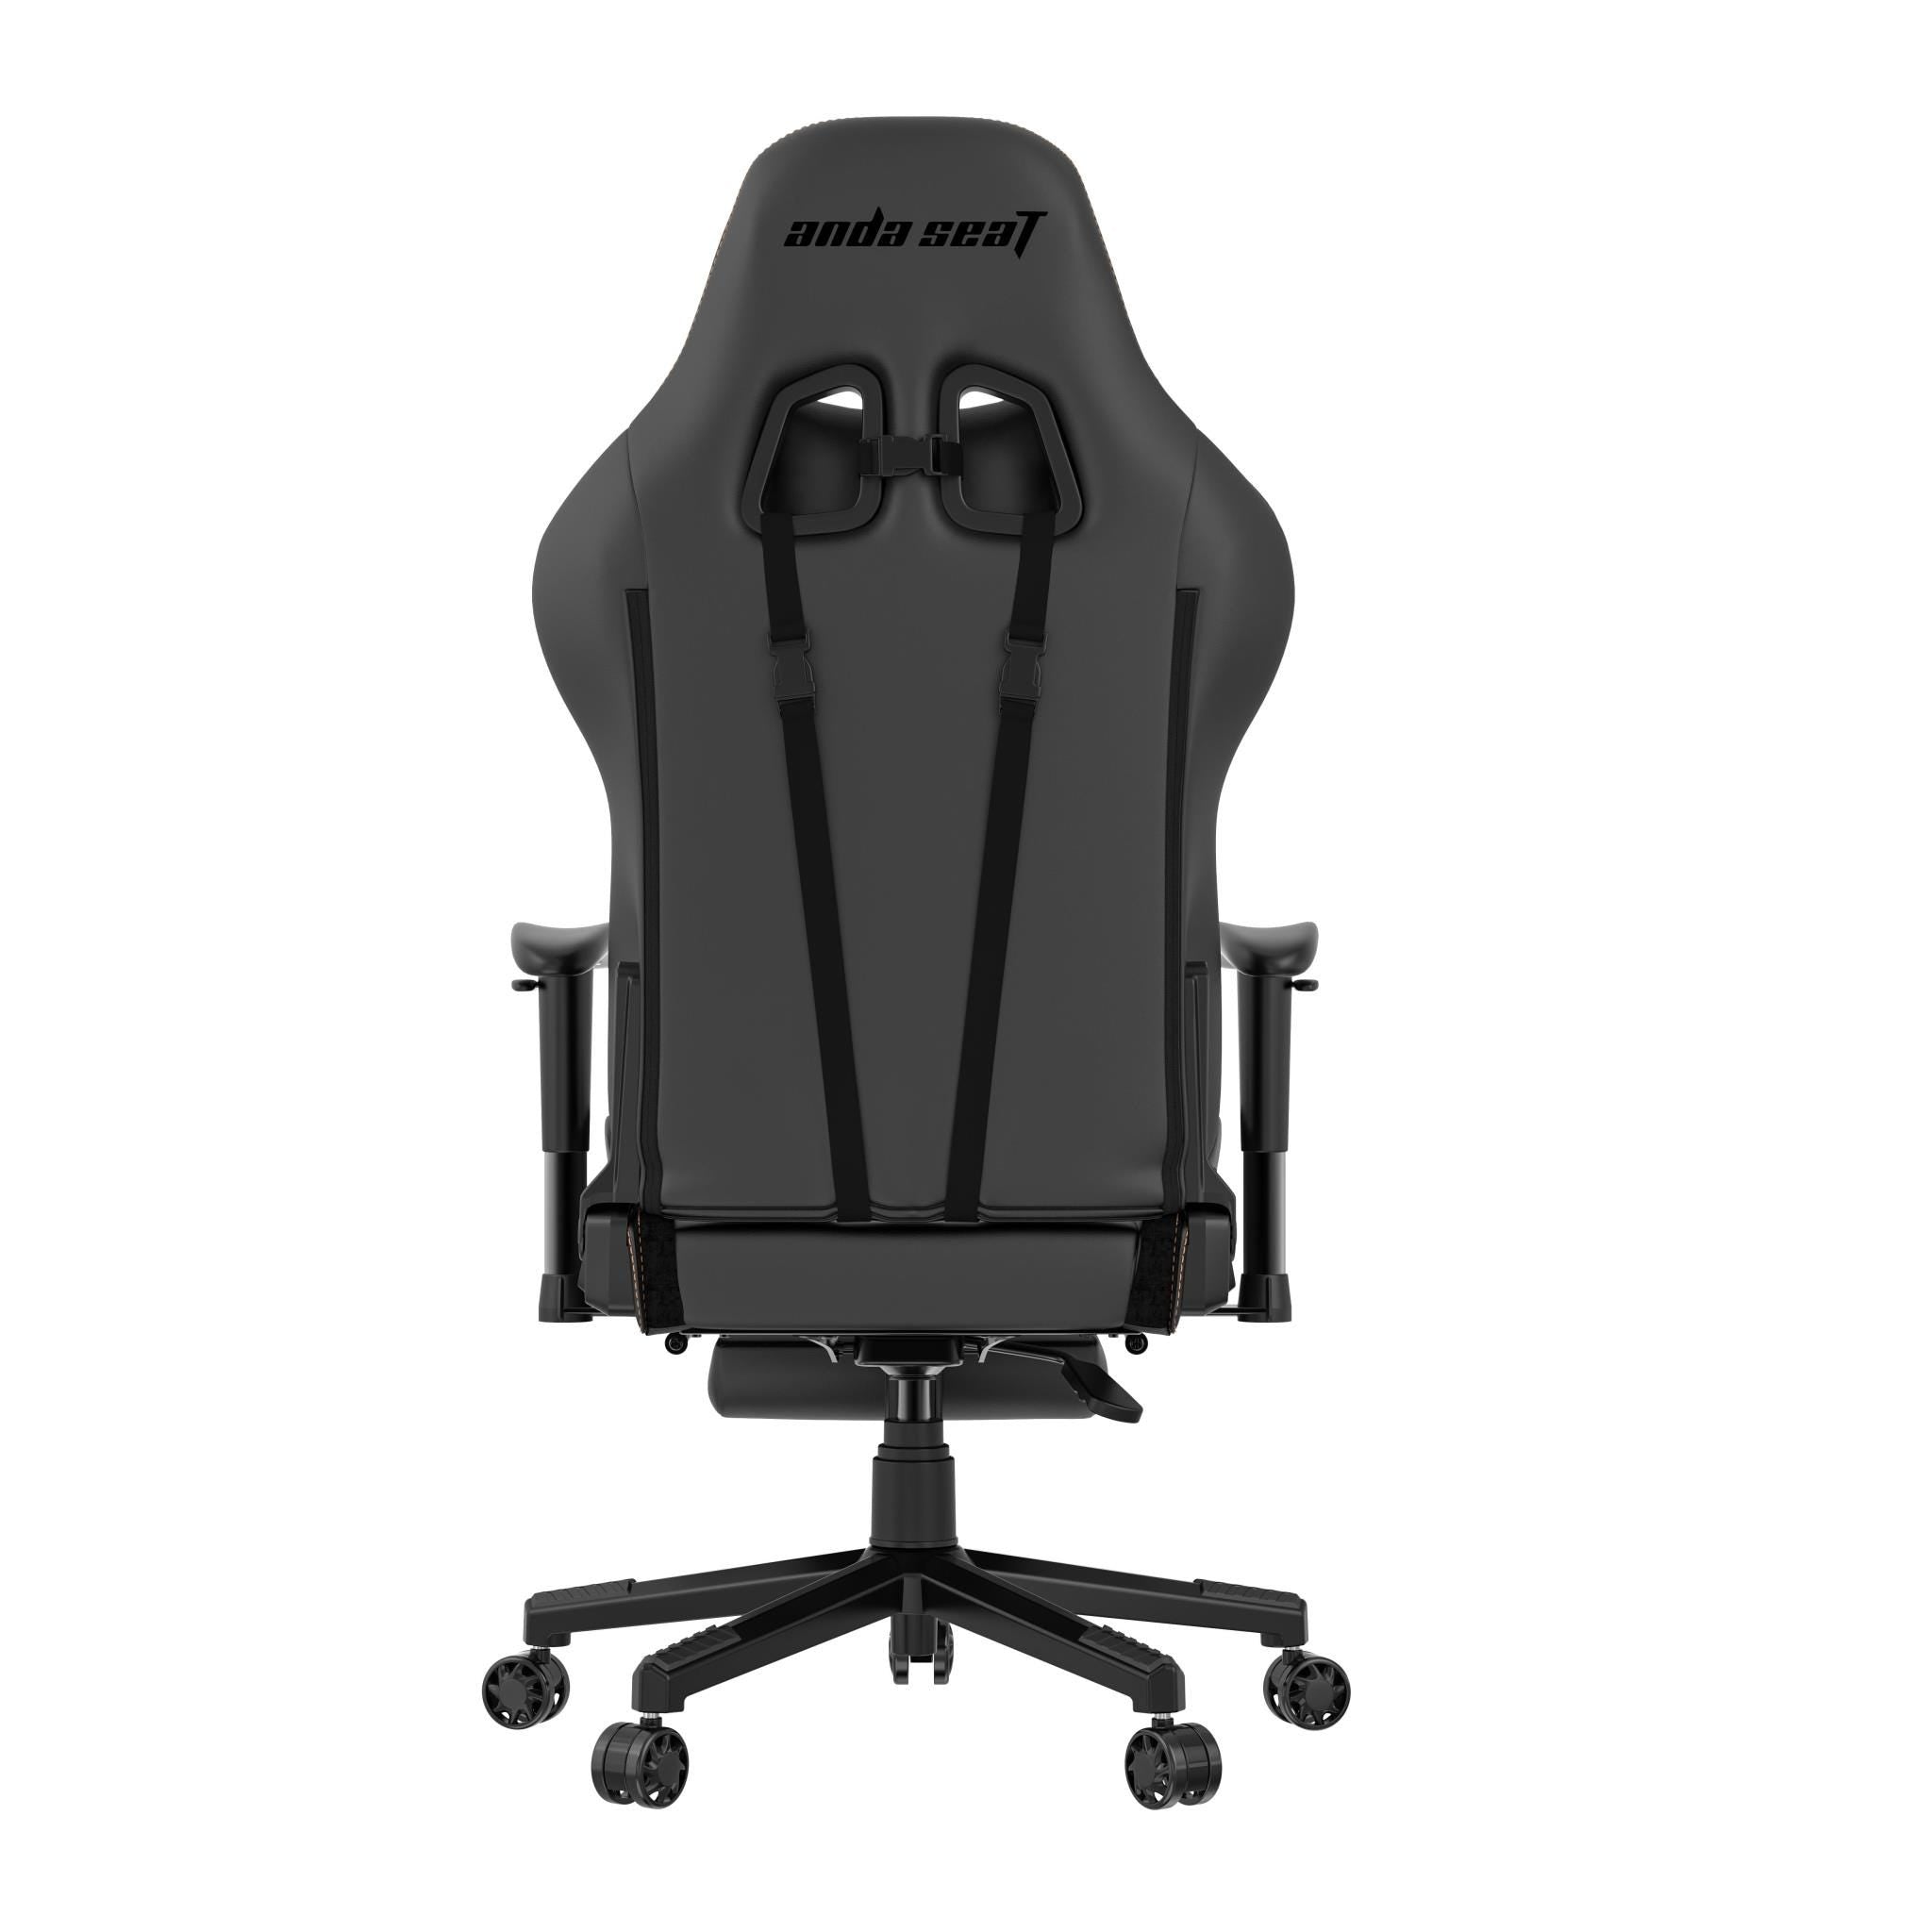 Anda Seat Jungle 2 Gaming Chair Black (AD5T-03-B-PVF) - Refurbished Pristine